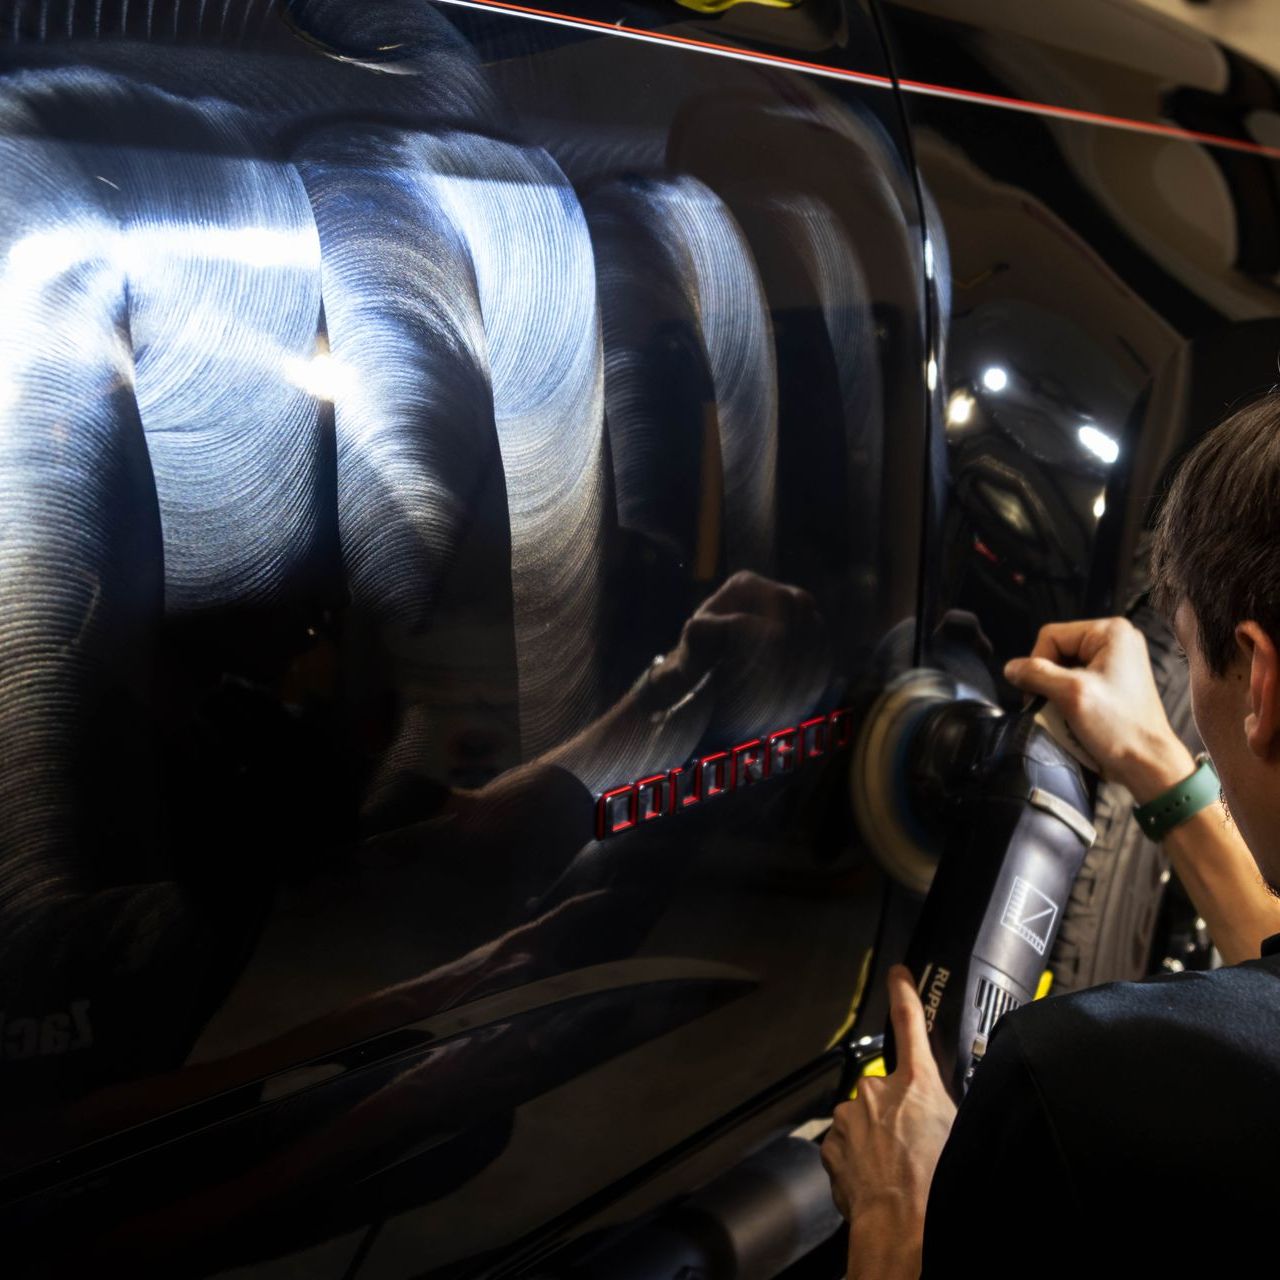 A man is polishing the side of a black car